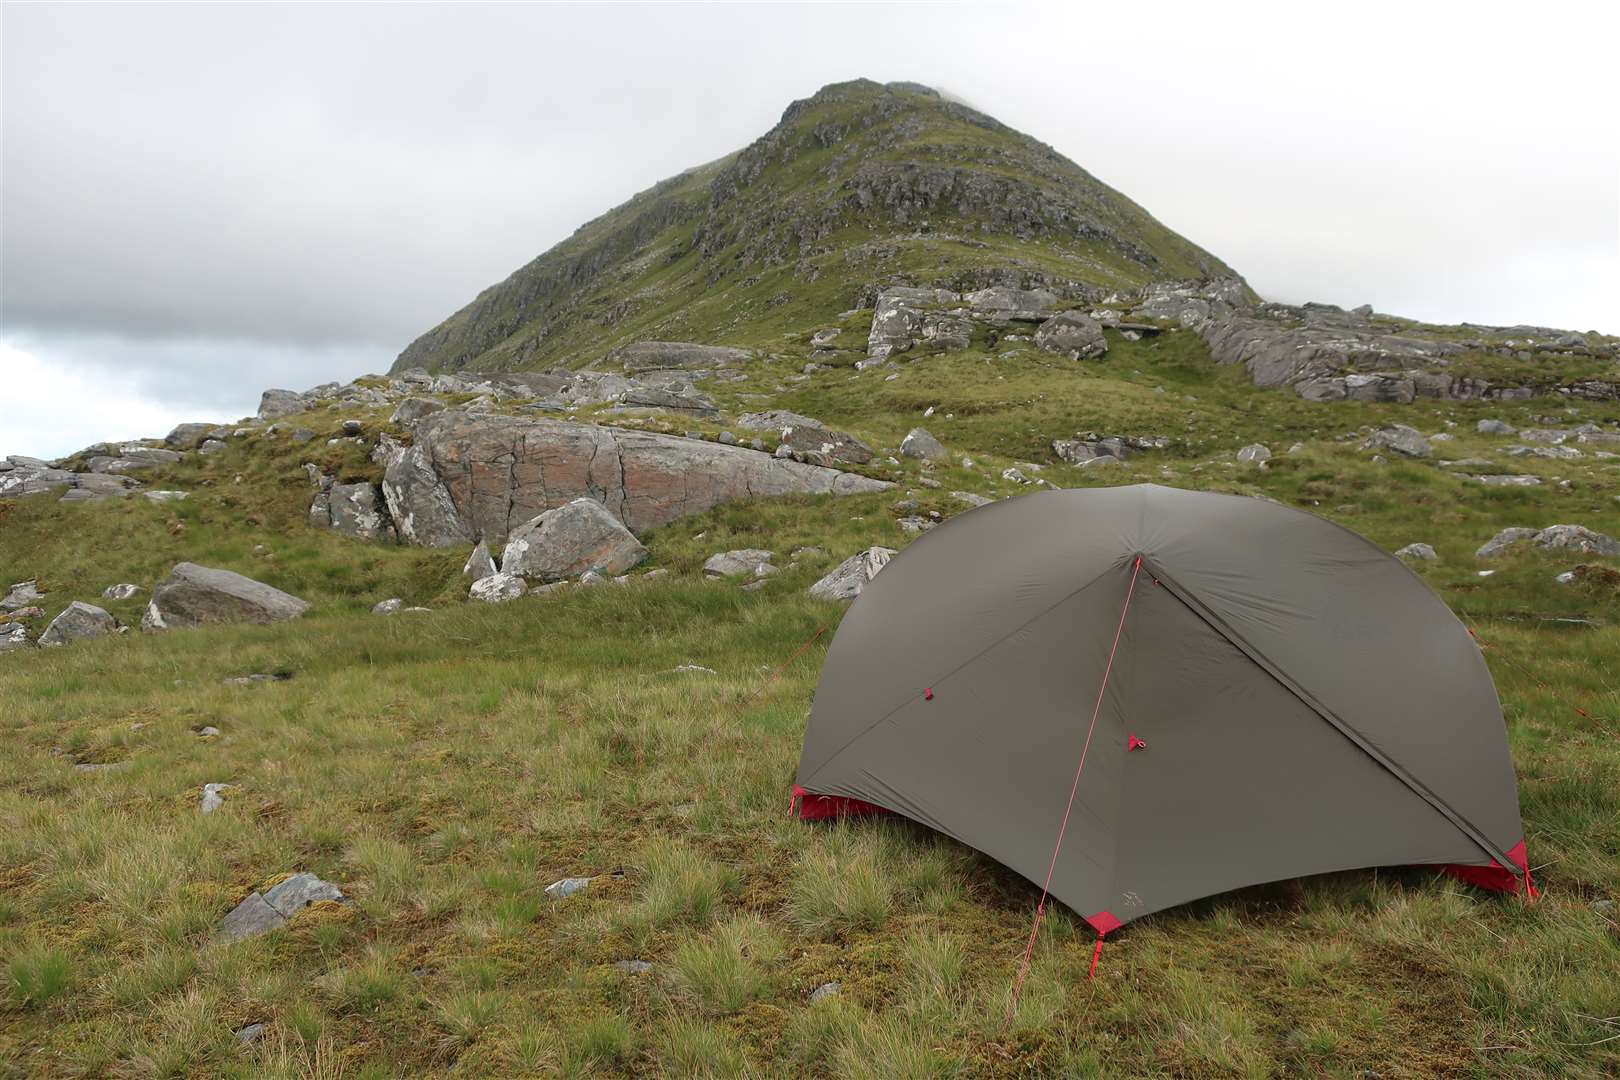 Camping at the Bealach Crudhain below the west ridge of Sgurr Choinnich.